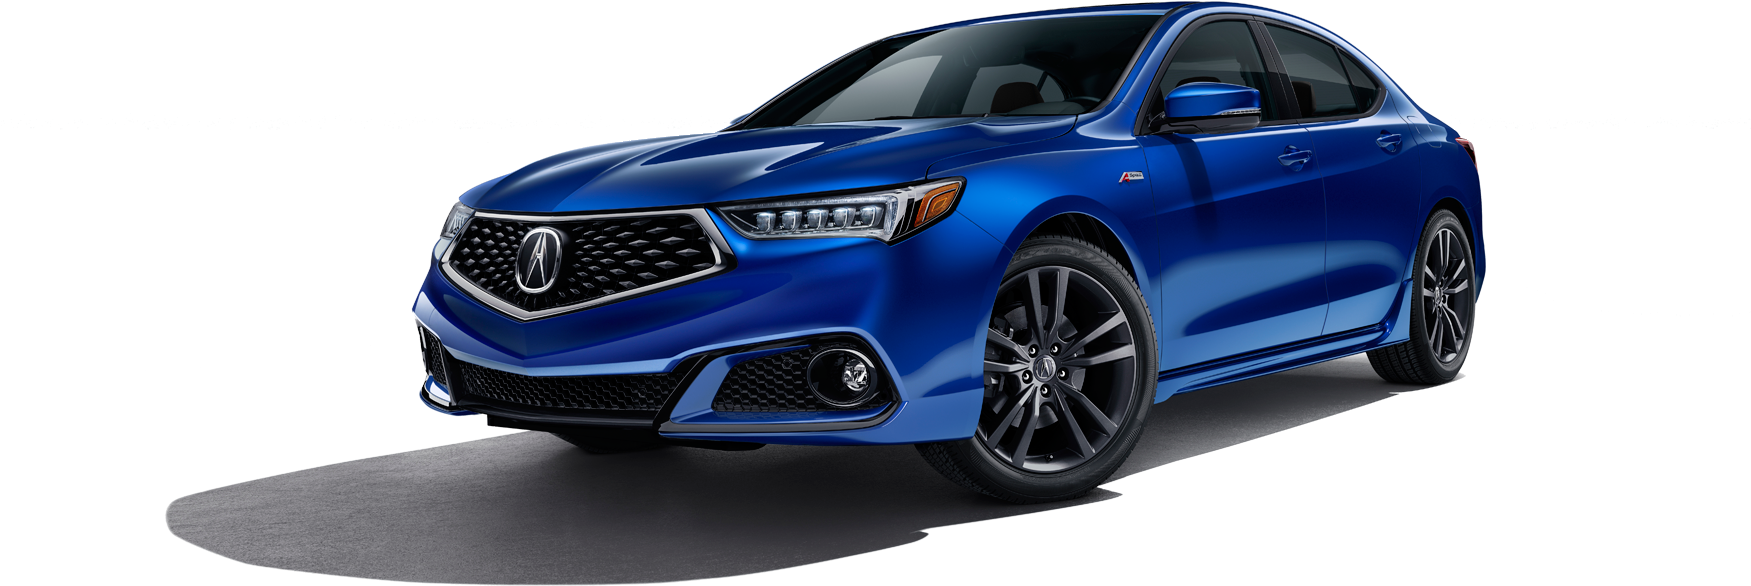 Blue Acura Sedan Profile View PNG